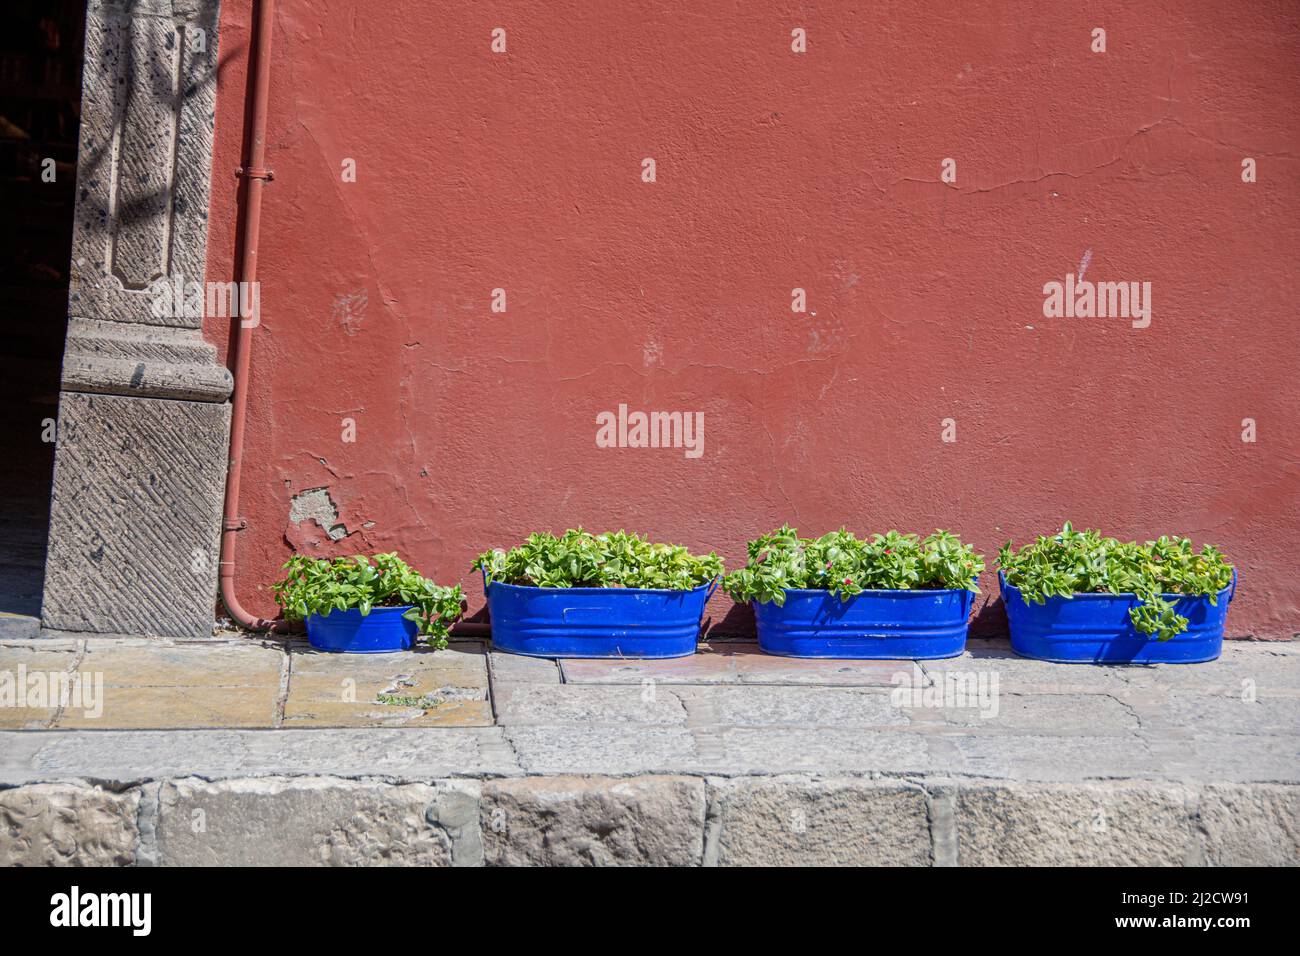 Piante in vaso di fronte ad una residenza. San Miguel de Allende, Guanajuato, Messico. Foto Stock